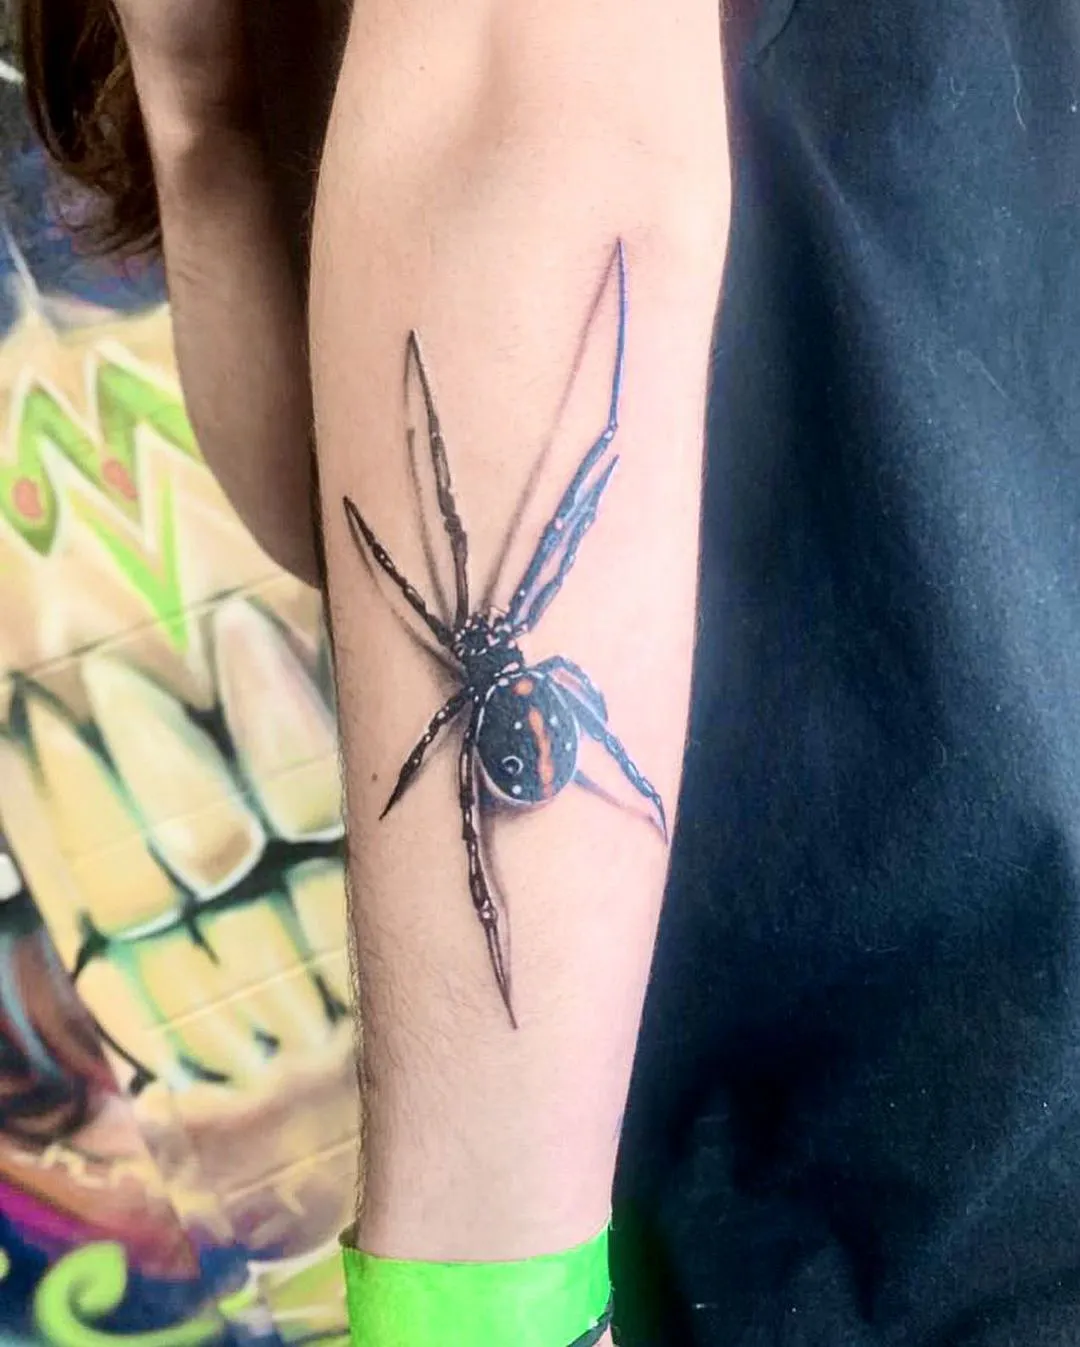 Black widow spider tattoo 1